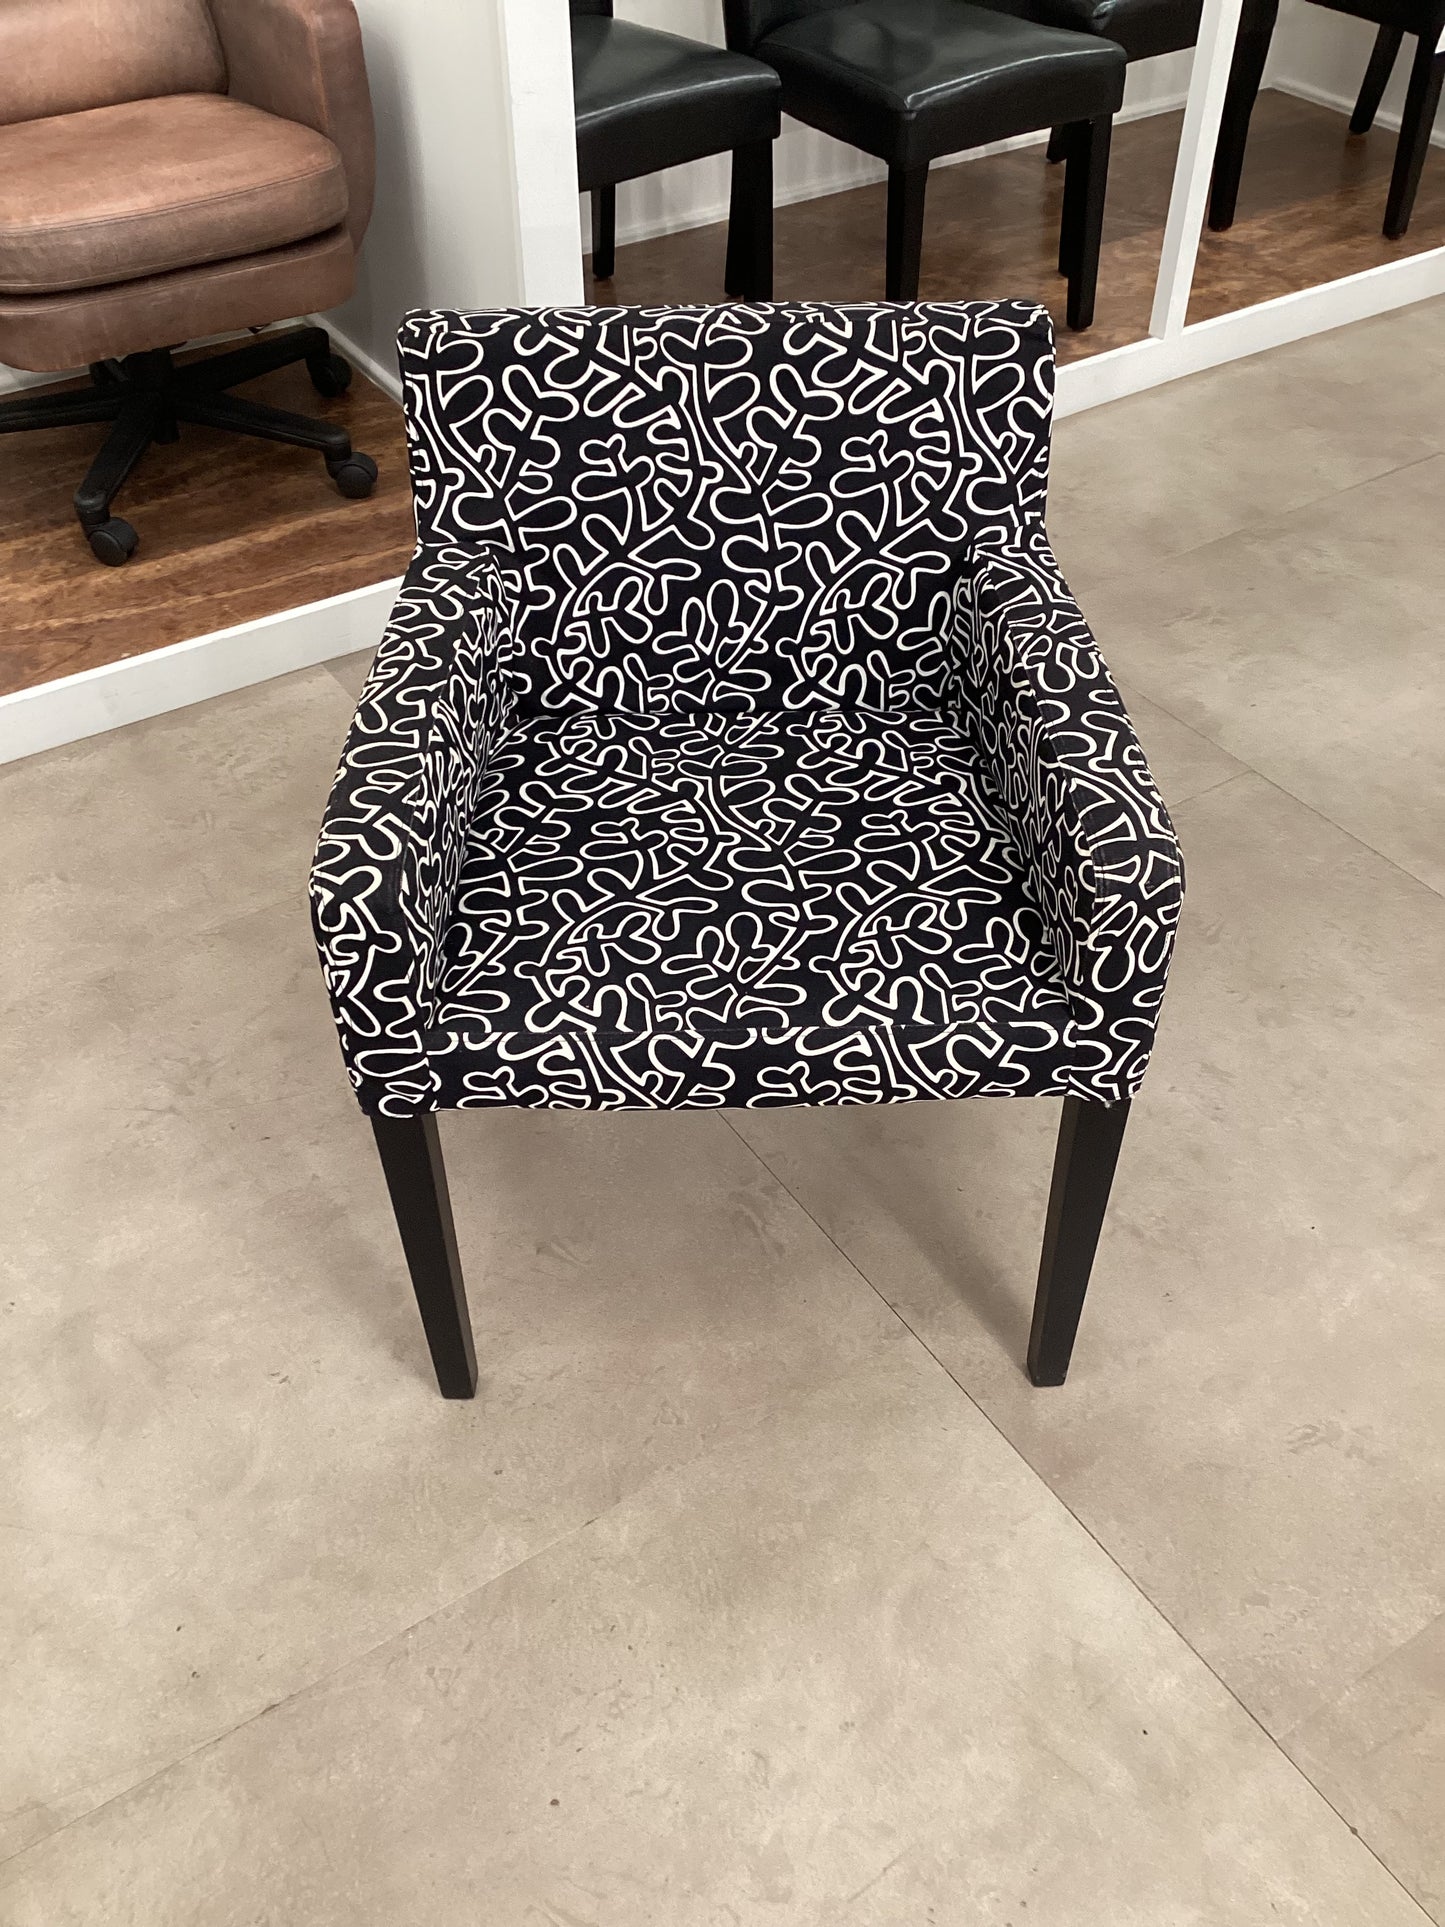 IKEA Armchair